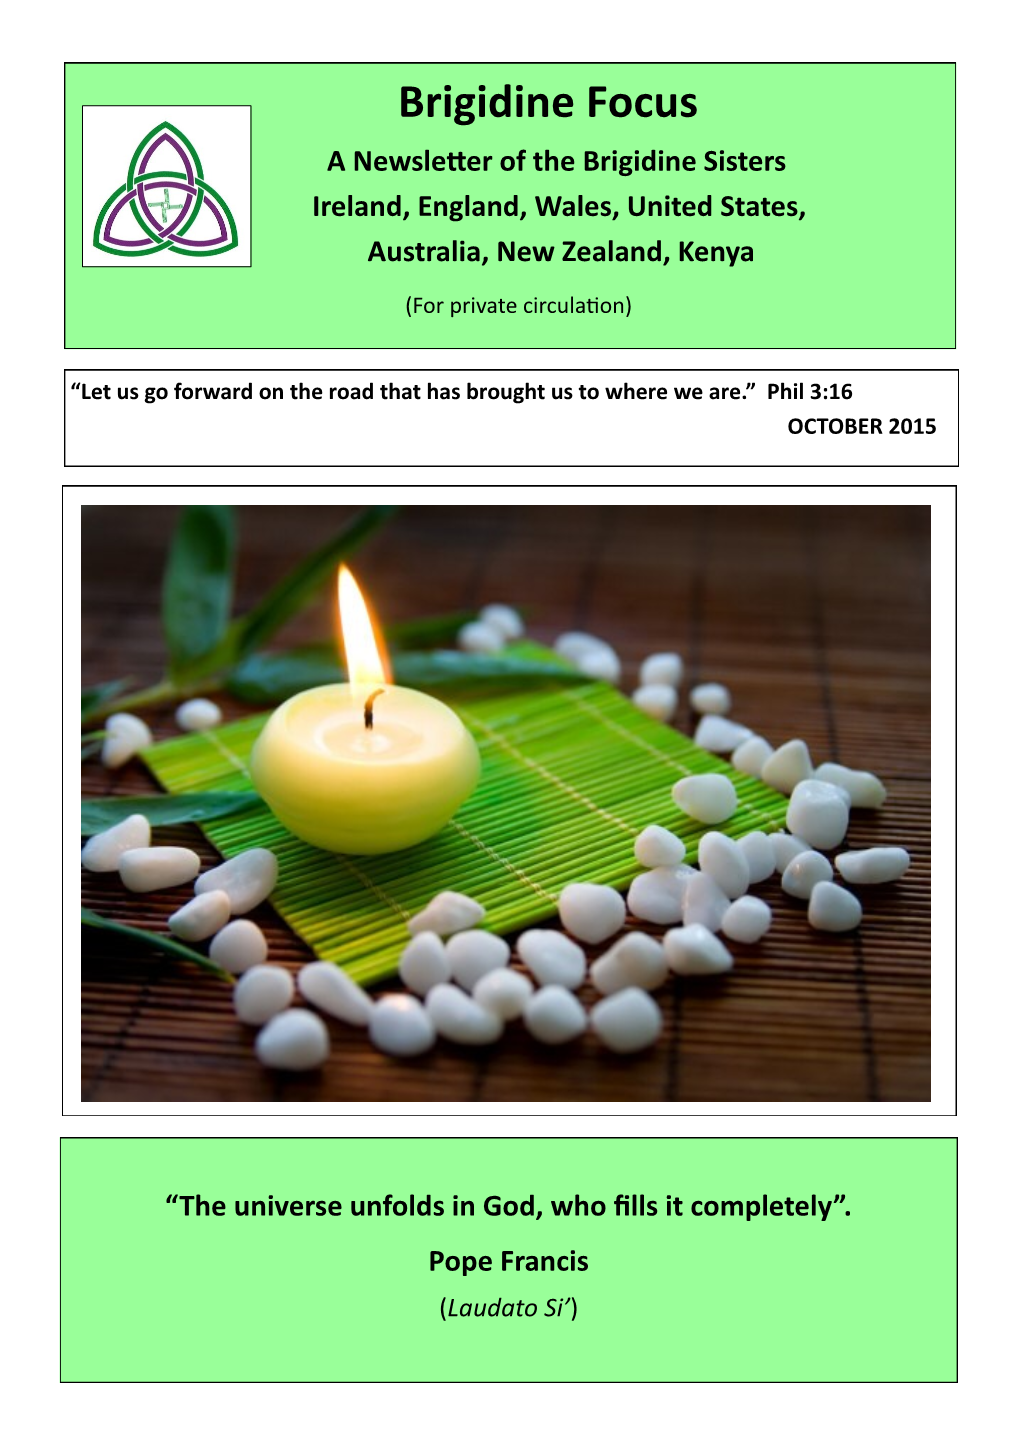 Brigidine Focus a Newsletter of the Brigidine Sisters Ireland, England, Wales, United States, Australia, New Zealand, Kenya